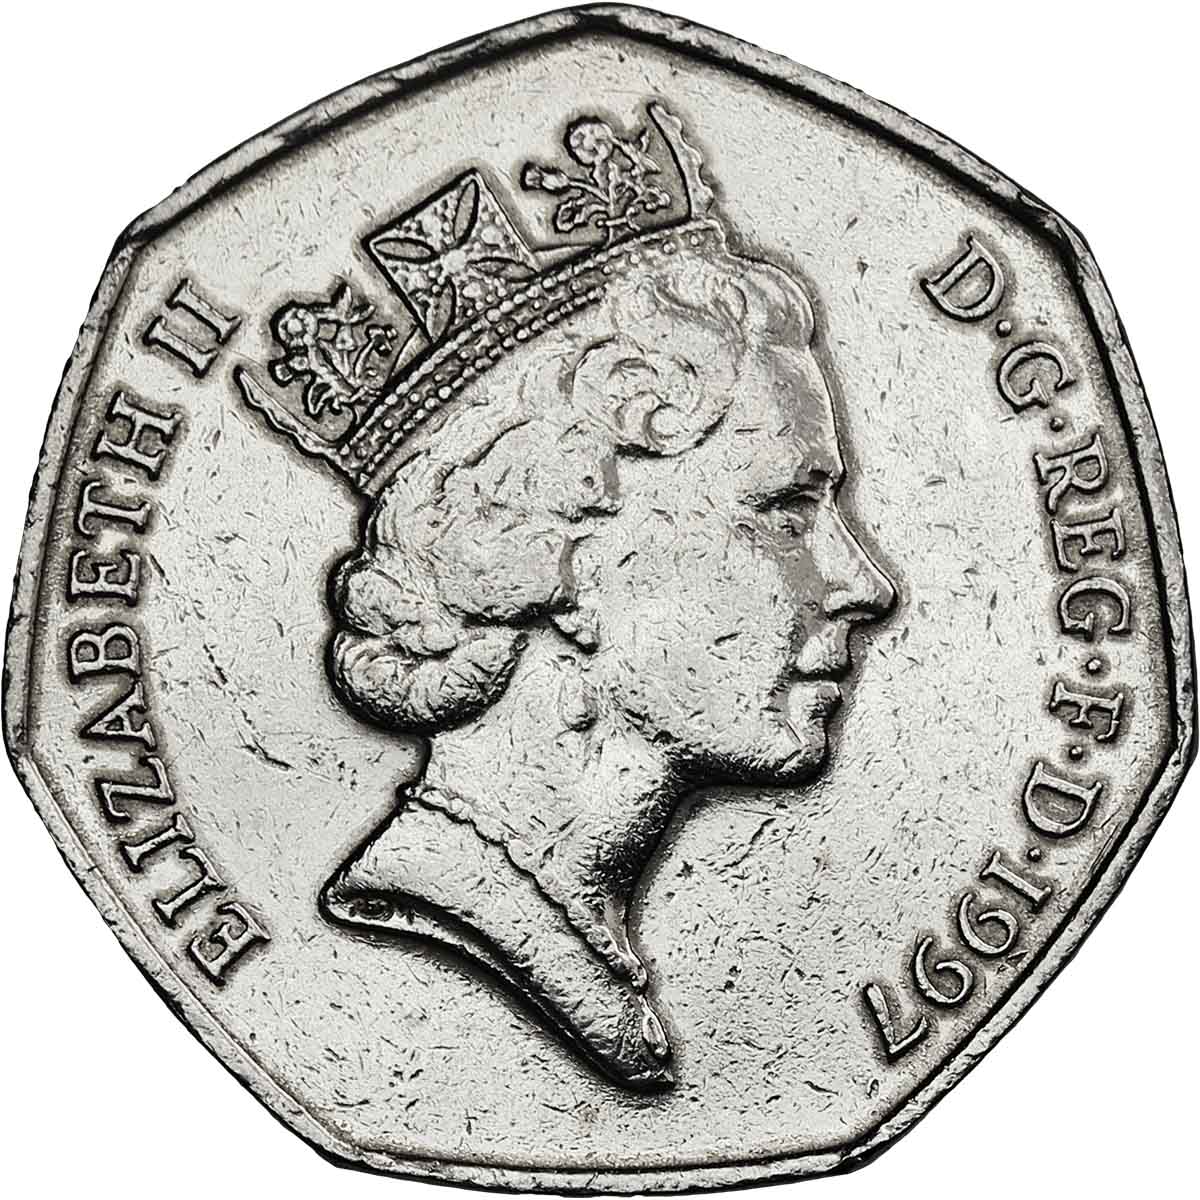 Queen Elizabeth II Royal Portraits 5-Coin Set VF-Unc